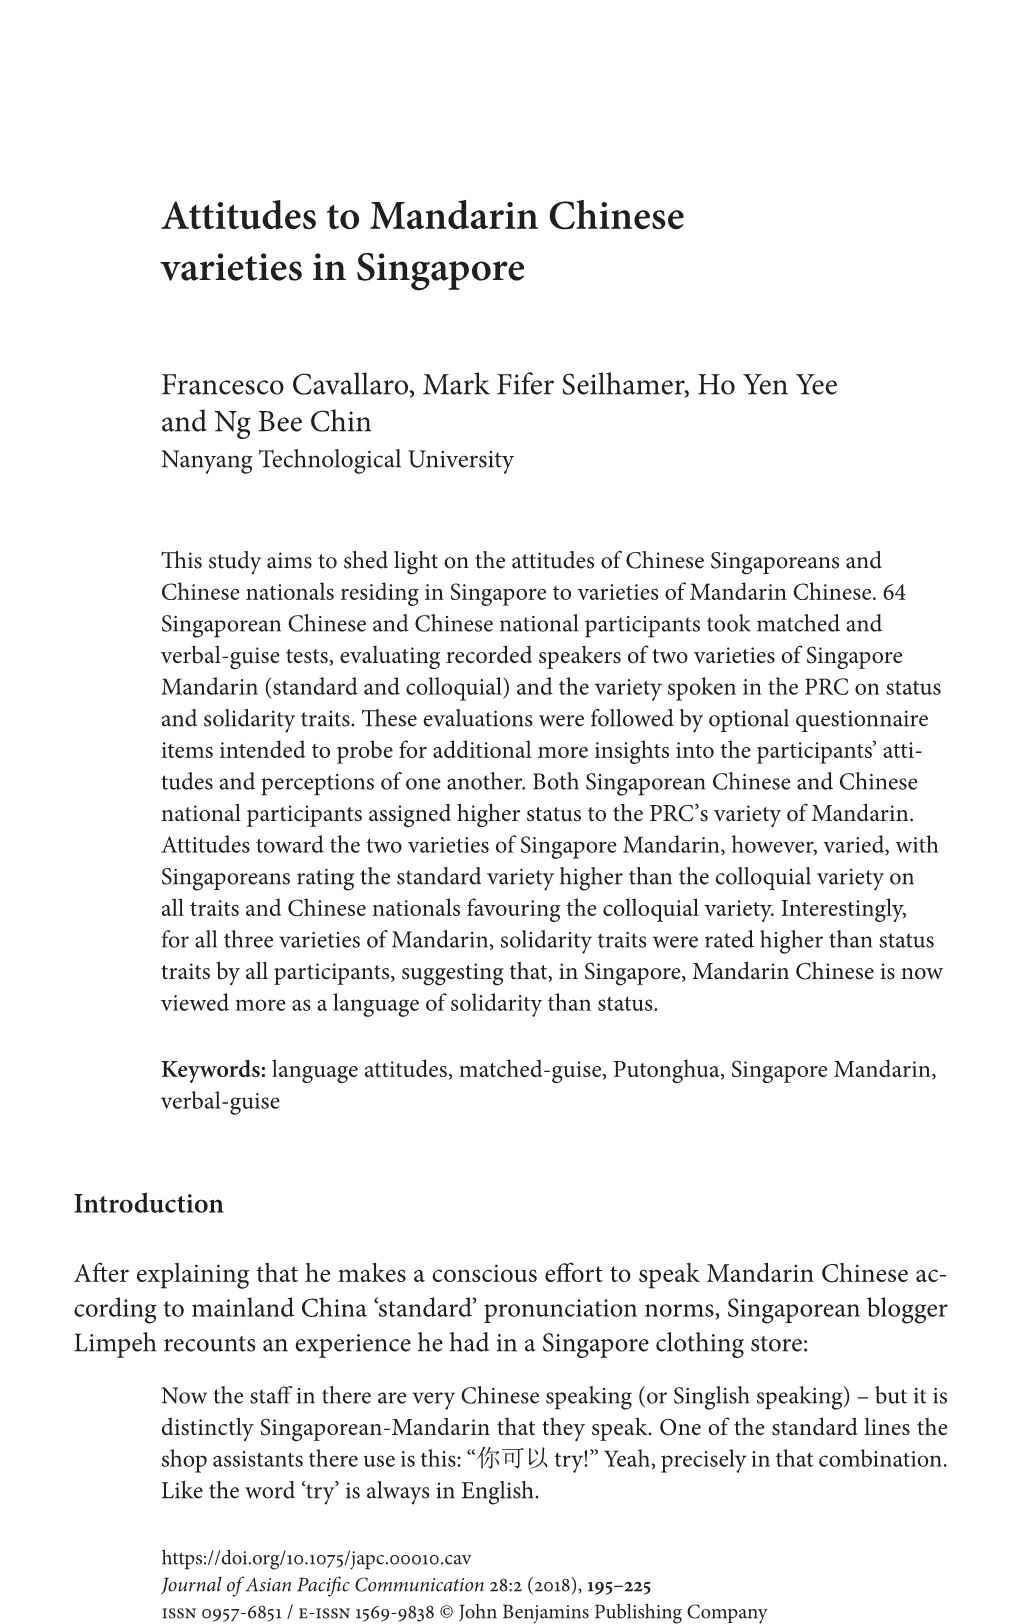 Attitudes to Mandarin Chinese Varieties in Singapore